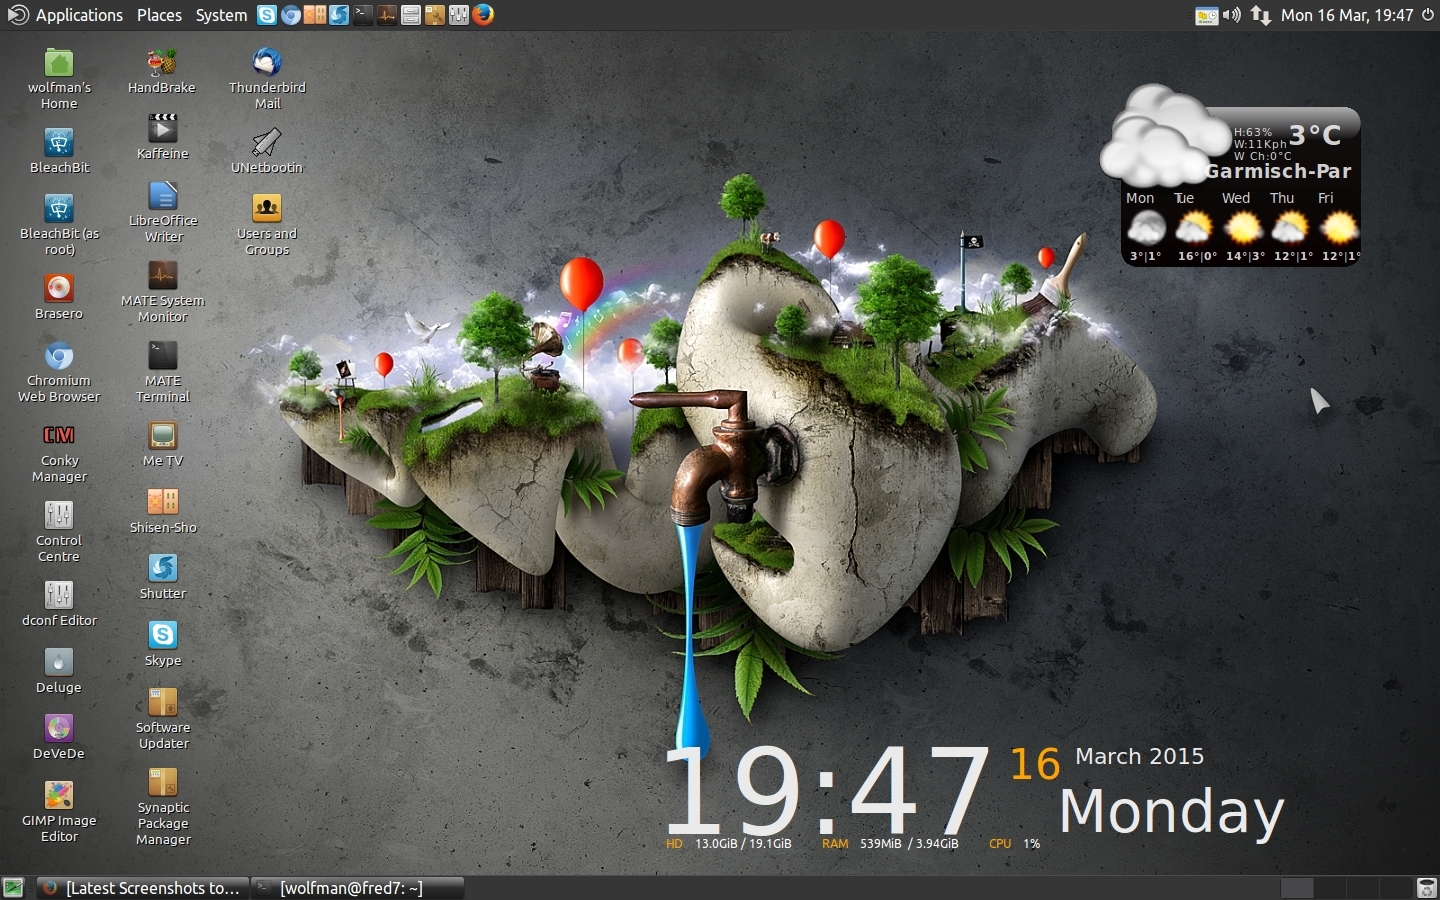 Romanschrijver Reserve cafetaria My Ubuntu Mate 15.04 desktop - Screenshots - Ubuntu MATE Community